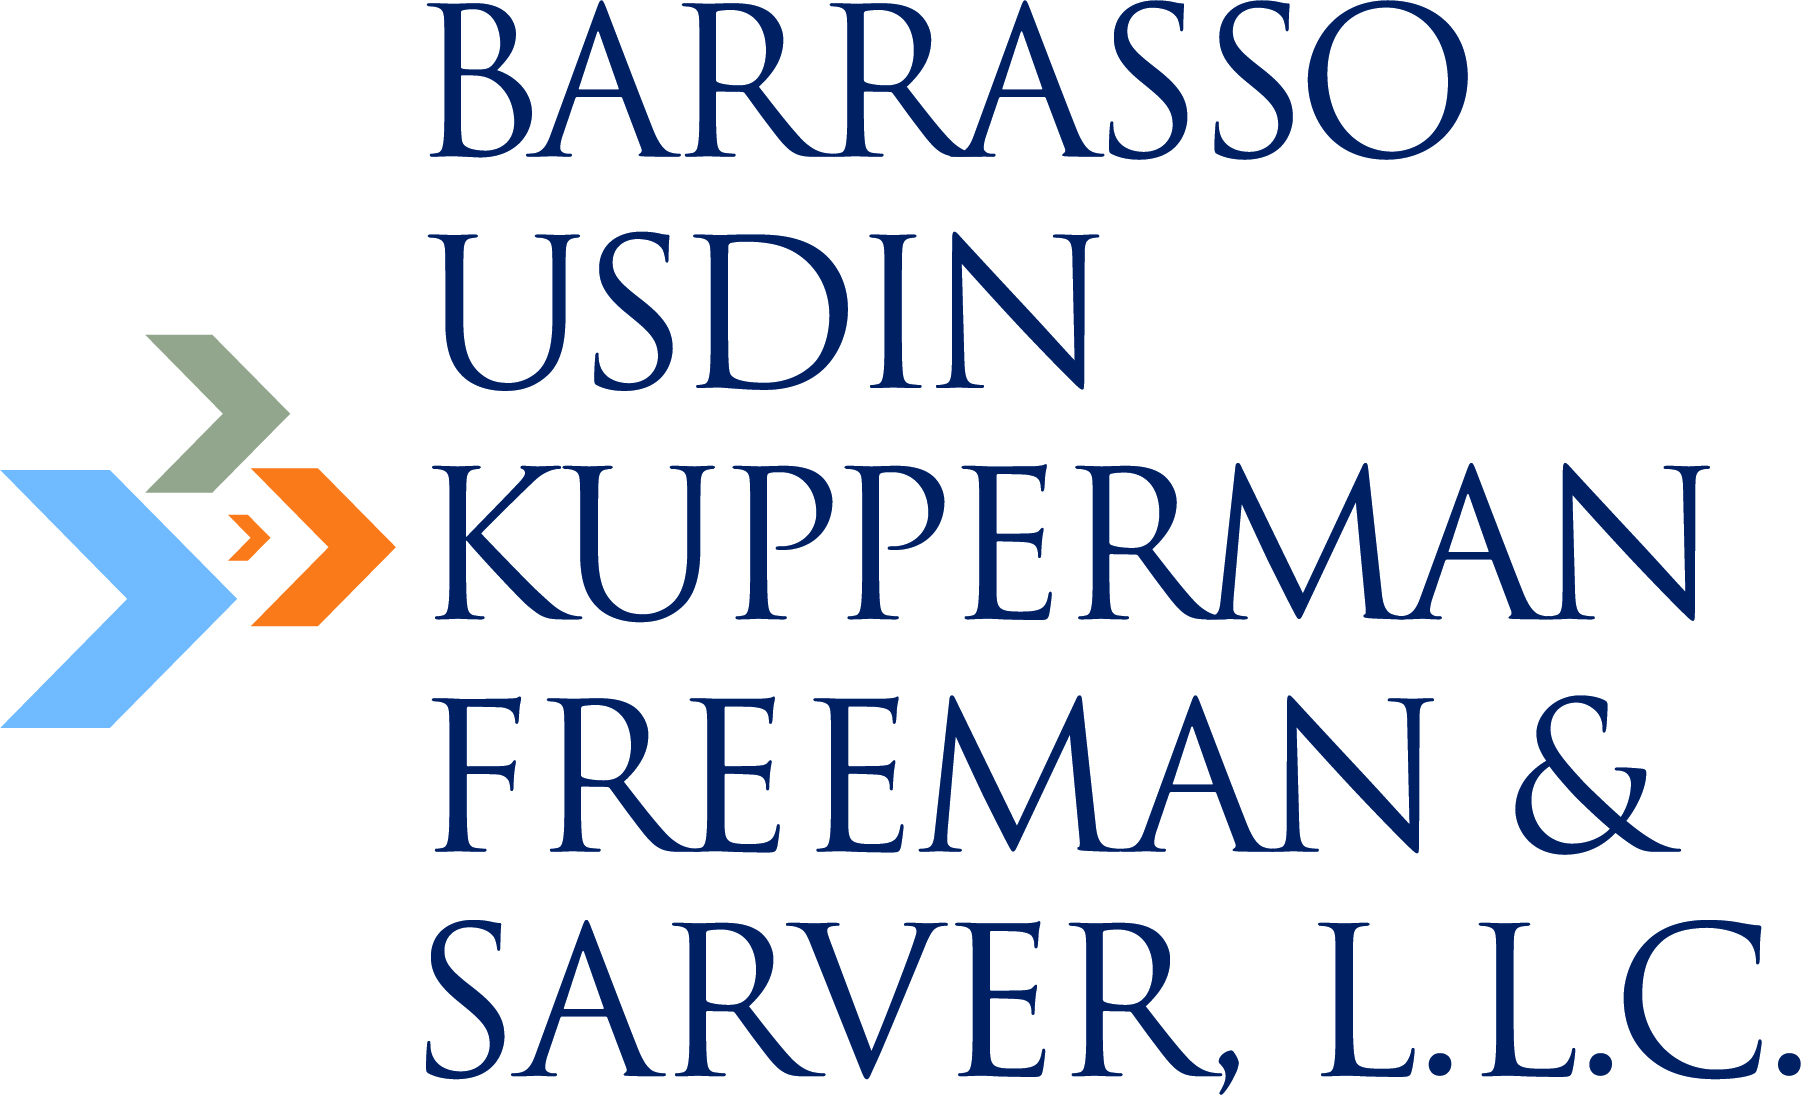 Barrasso Usdin Kupperman Freeman & Sarver, L.L.C.